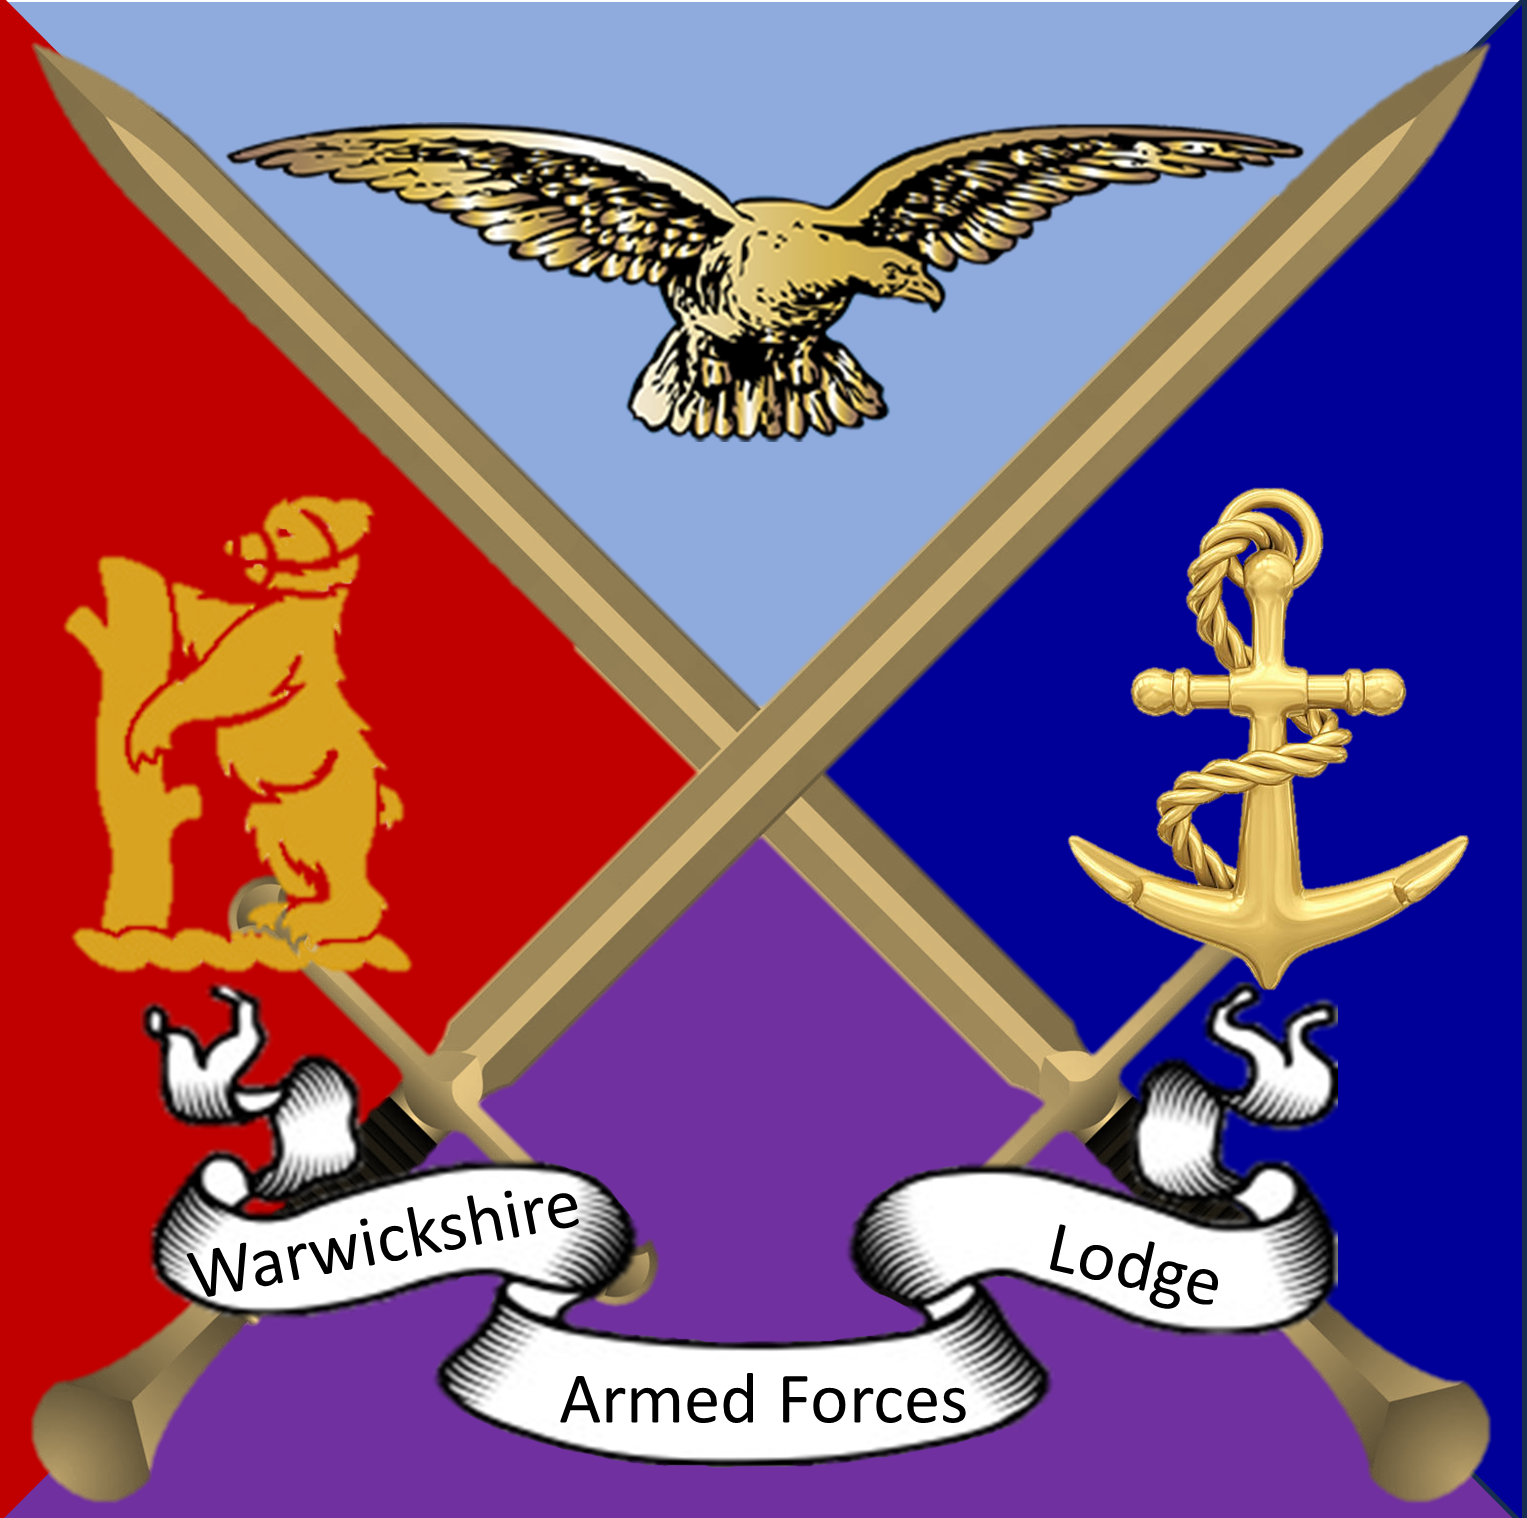 Warwickshire Armed Forces Lodge 10039 logo